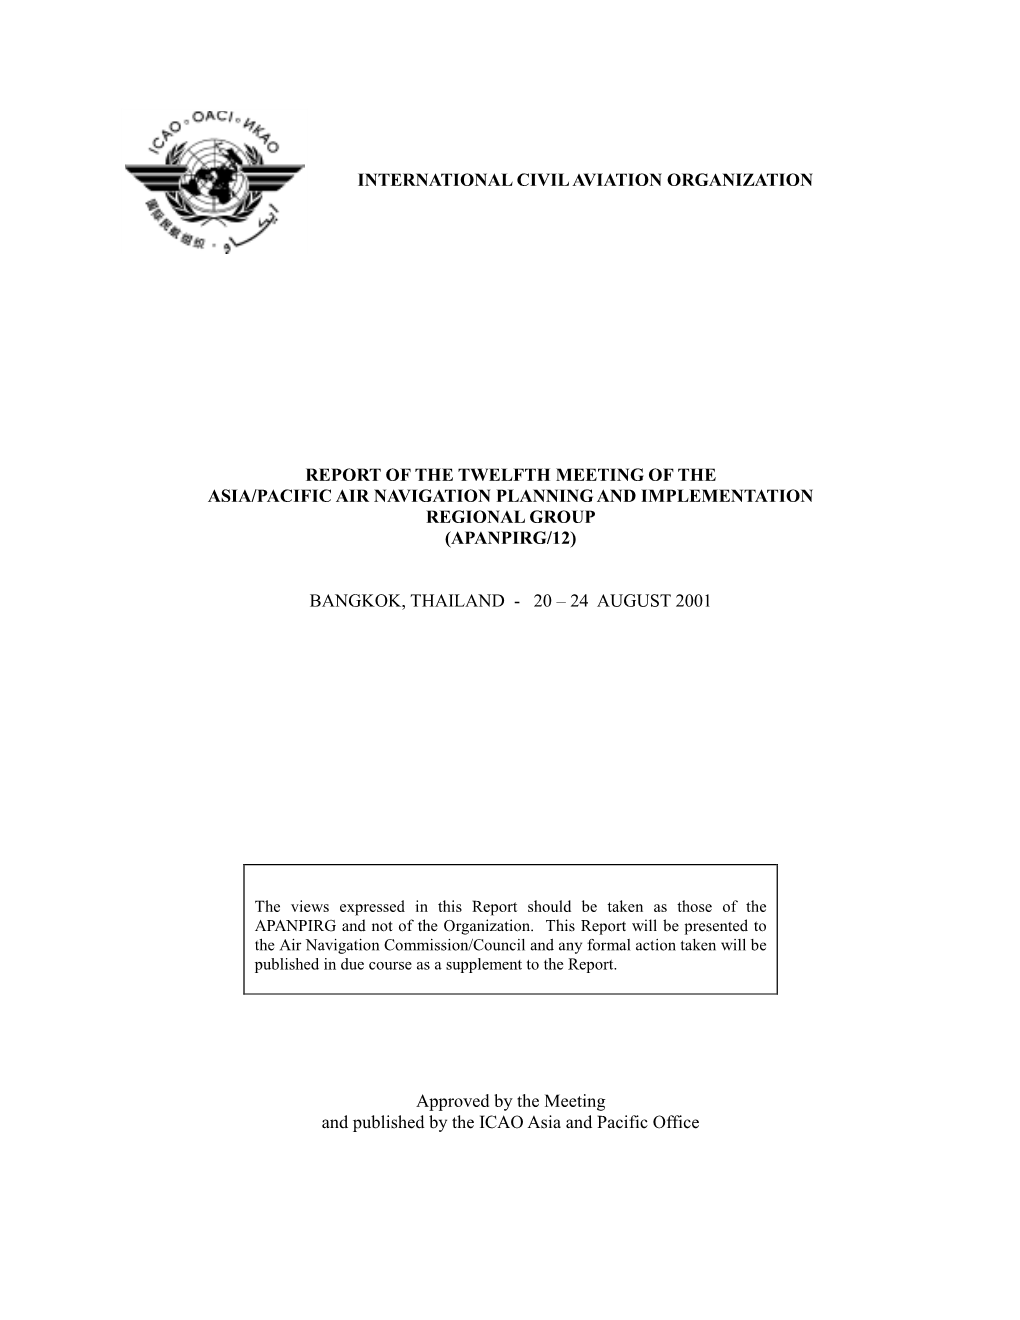 International Civil Aviation Organization Report